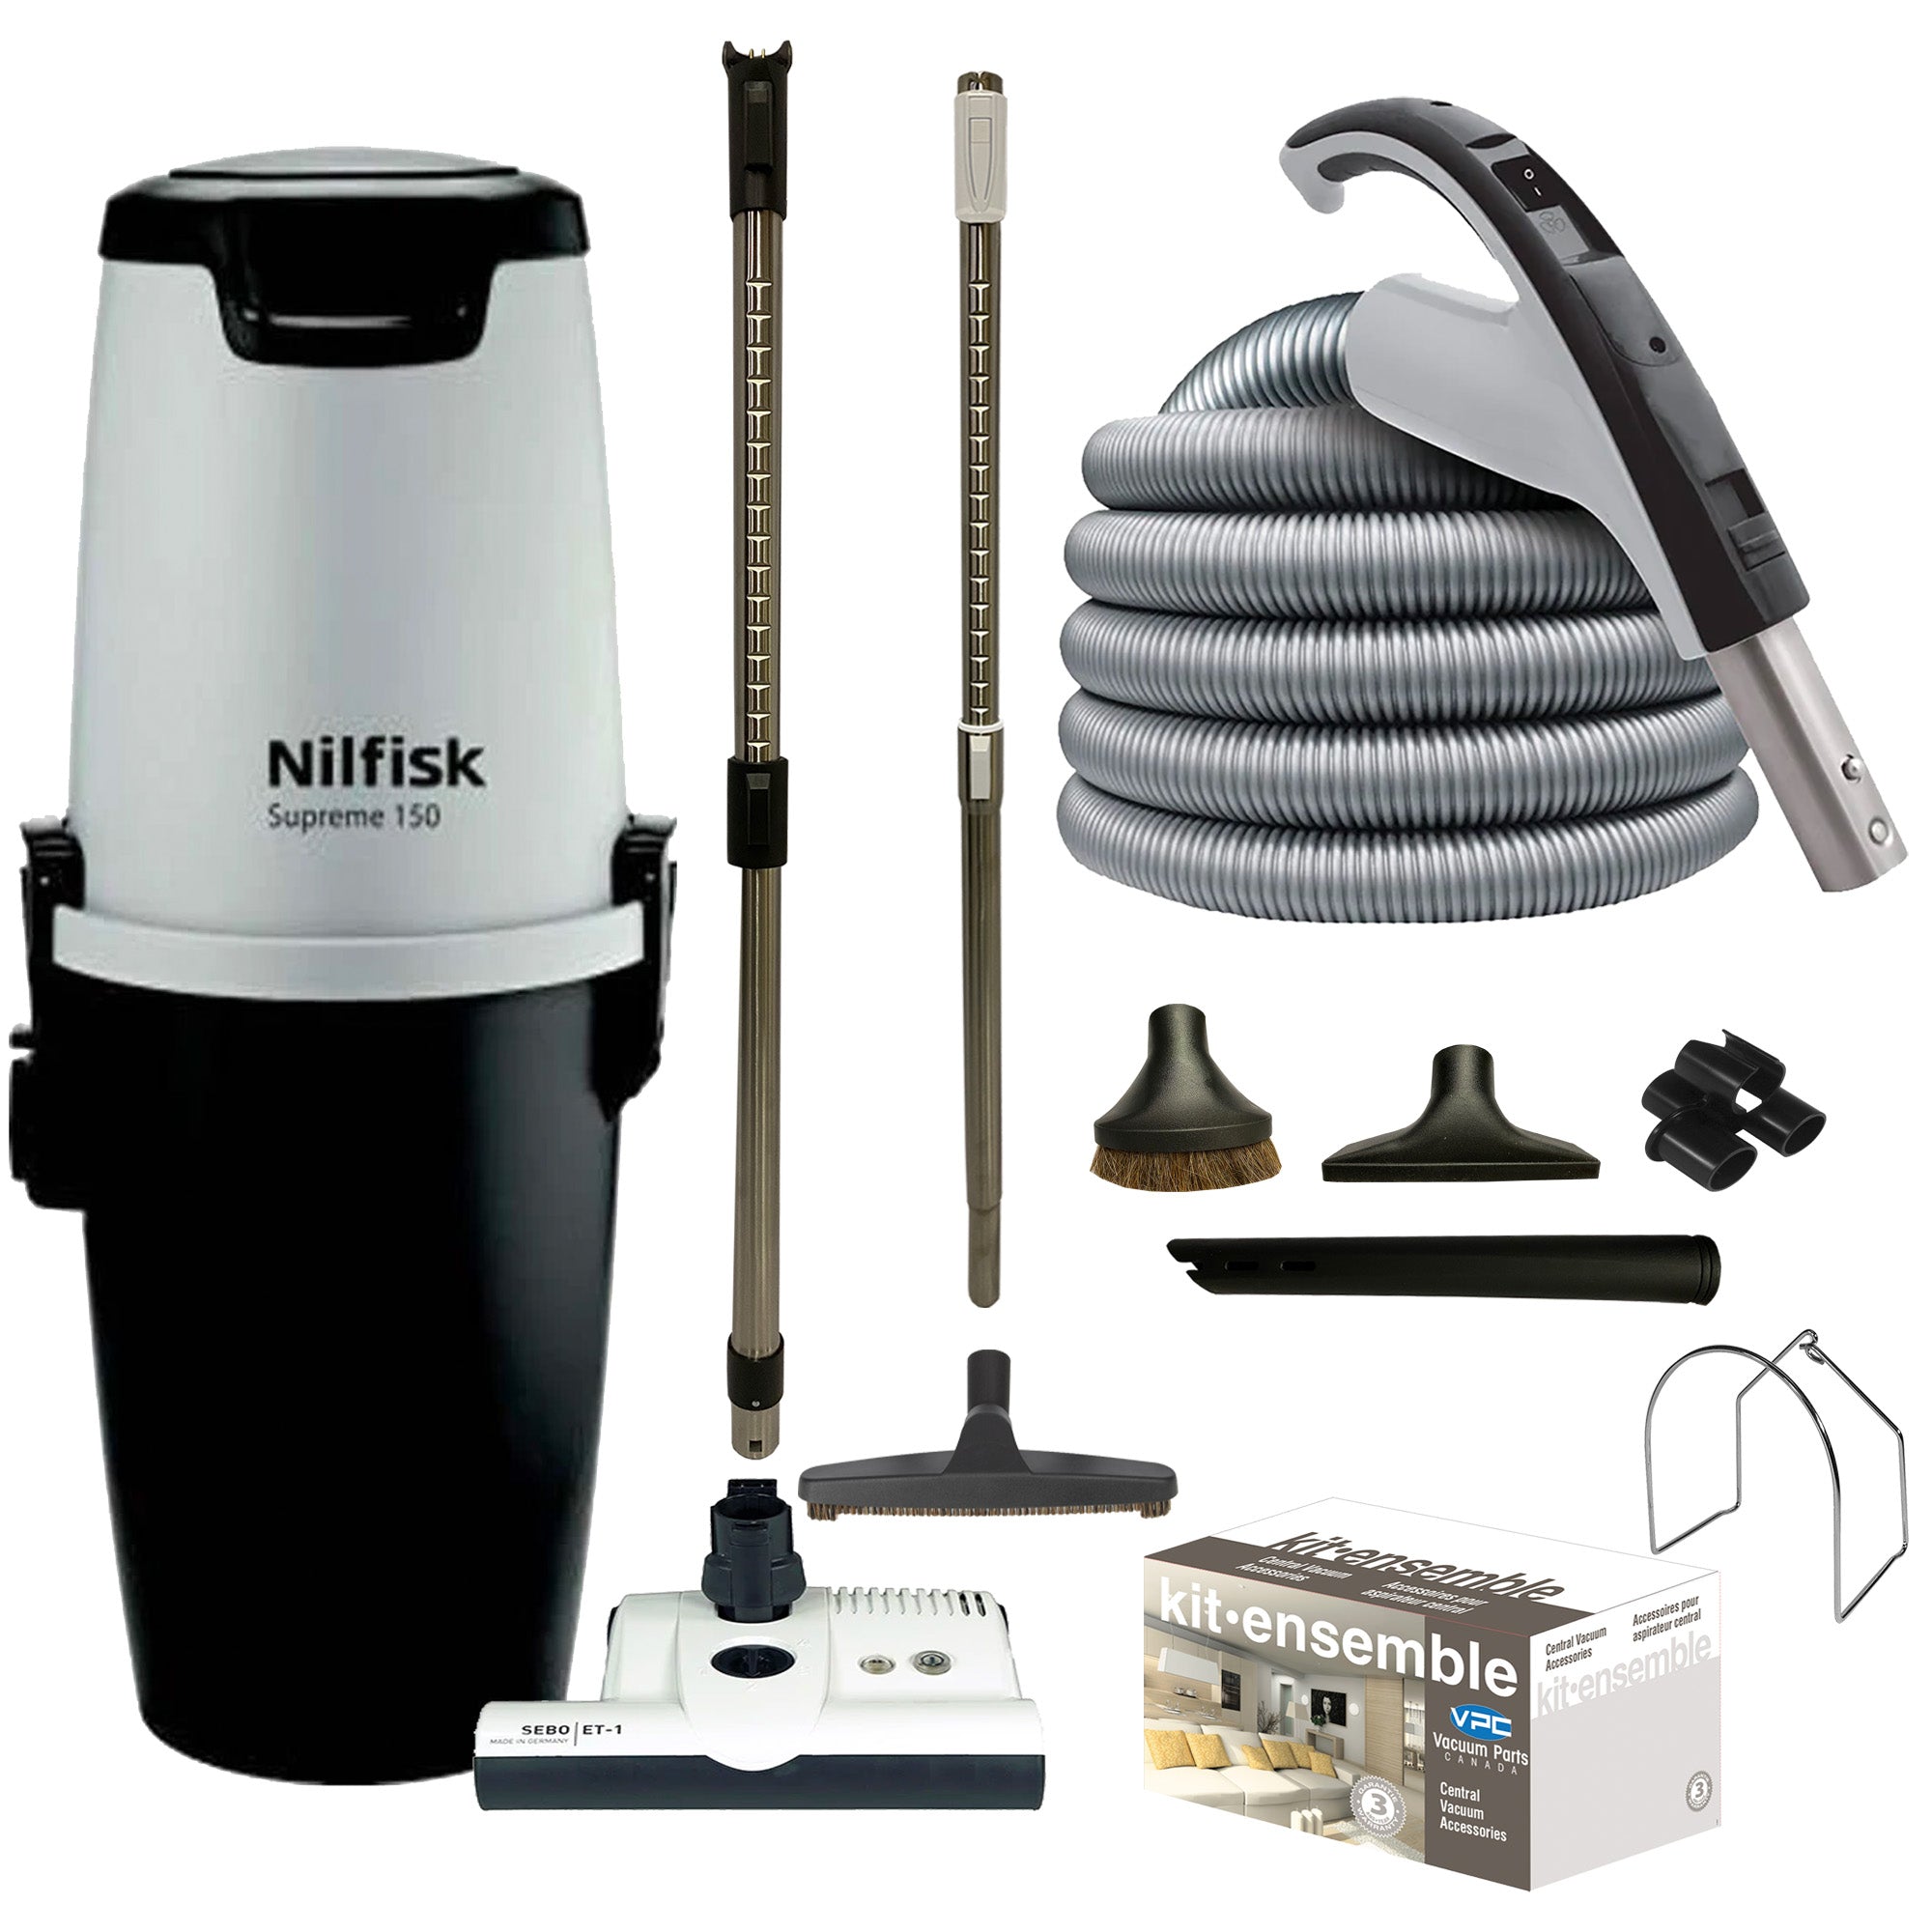 Nilfisk Supreme 150 Central Vacuum with SEBO Premium Electric Kit